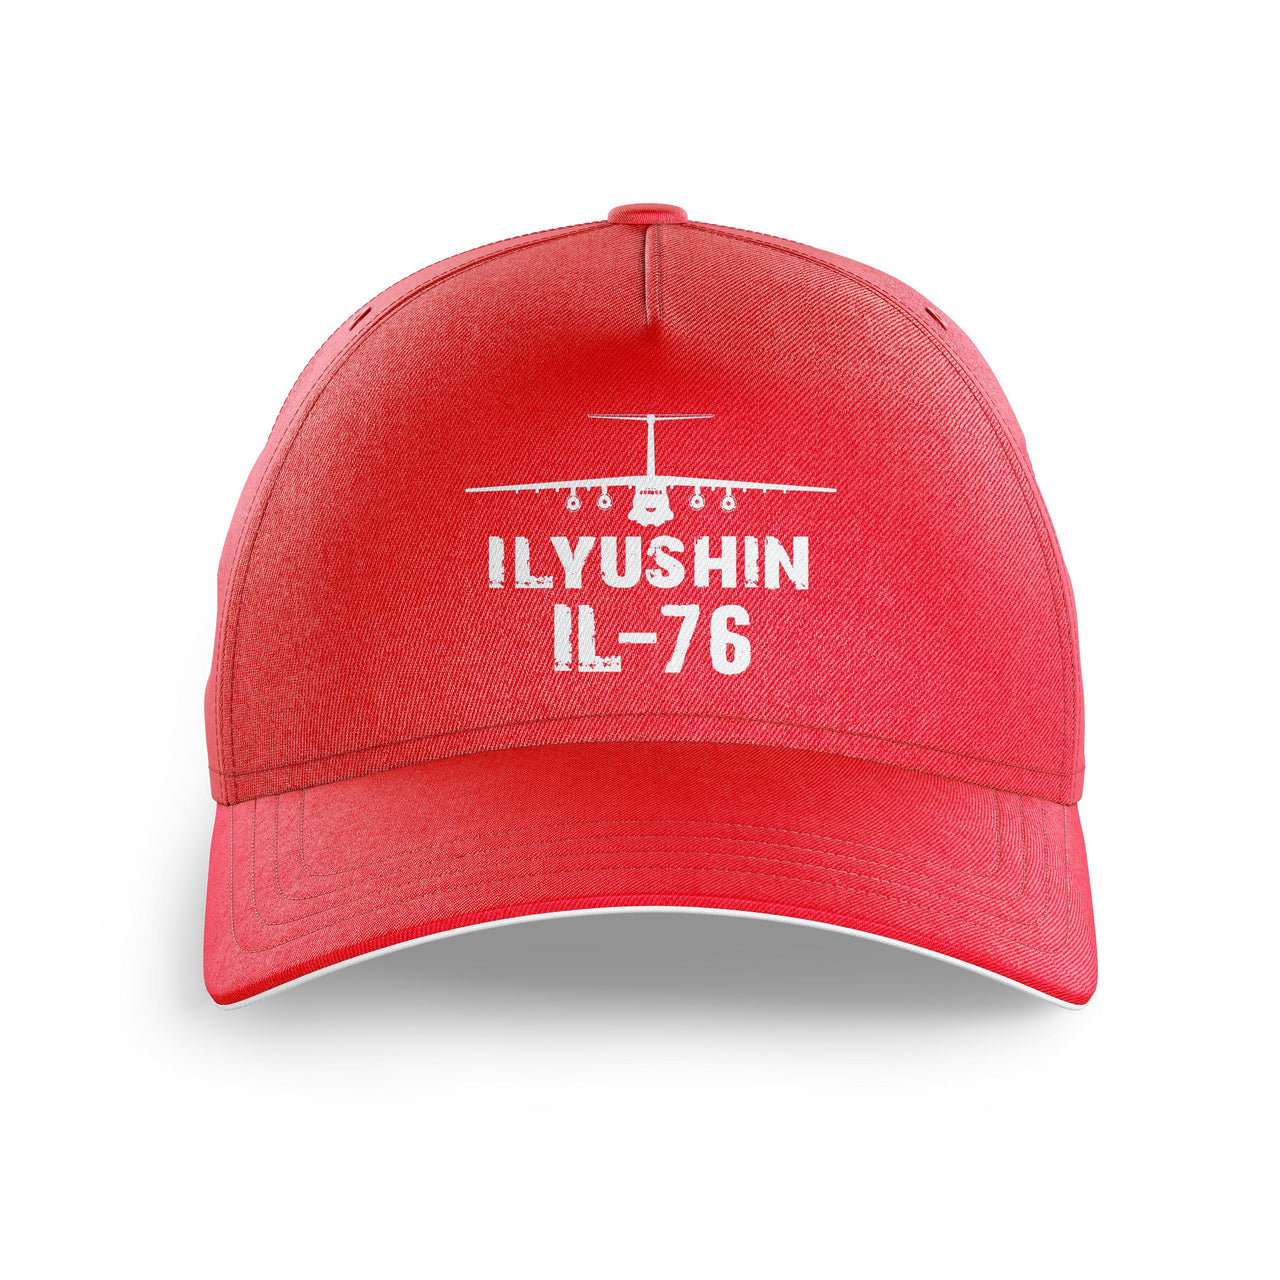 ILyushin IL-76 & Plane Printed Hats